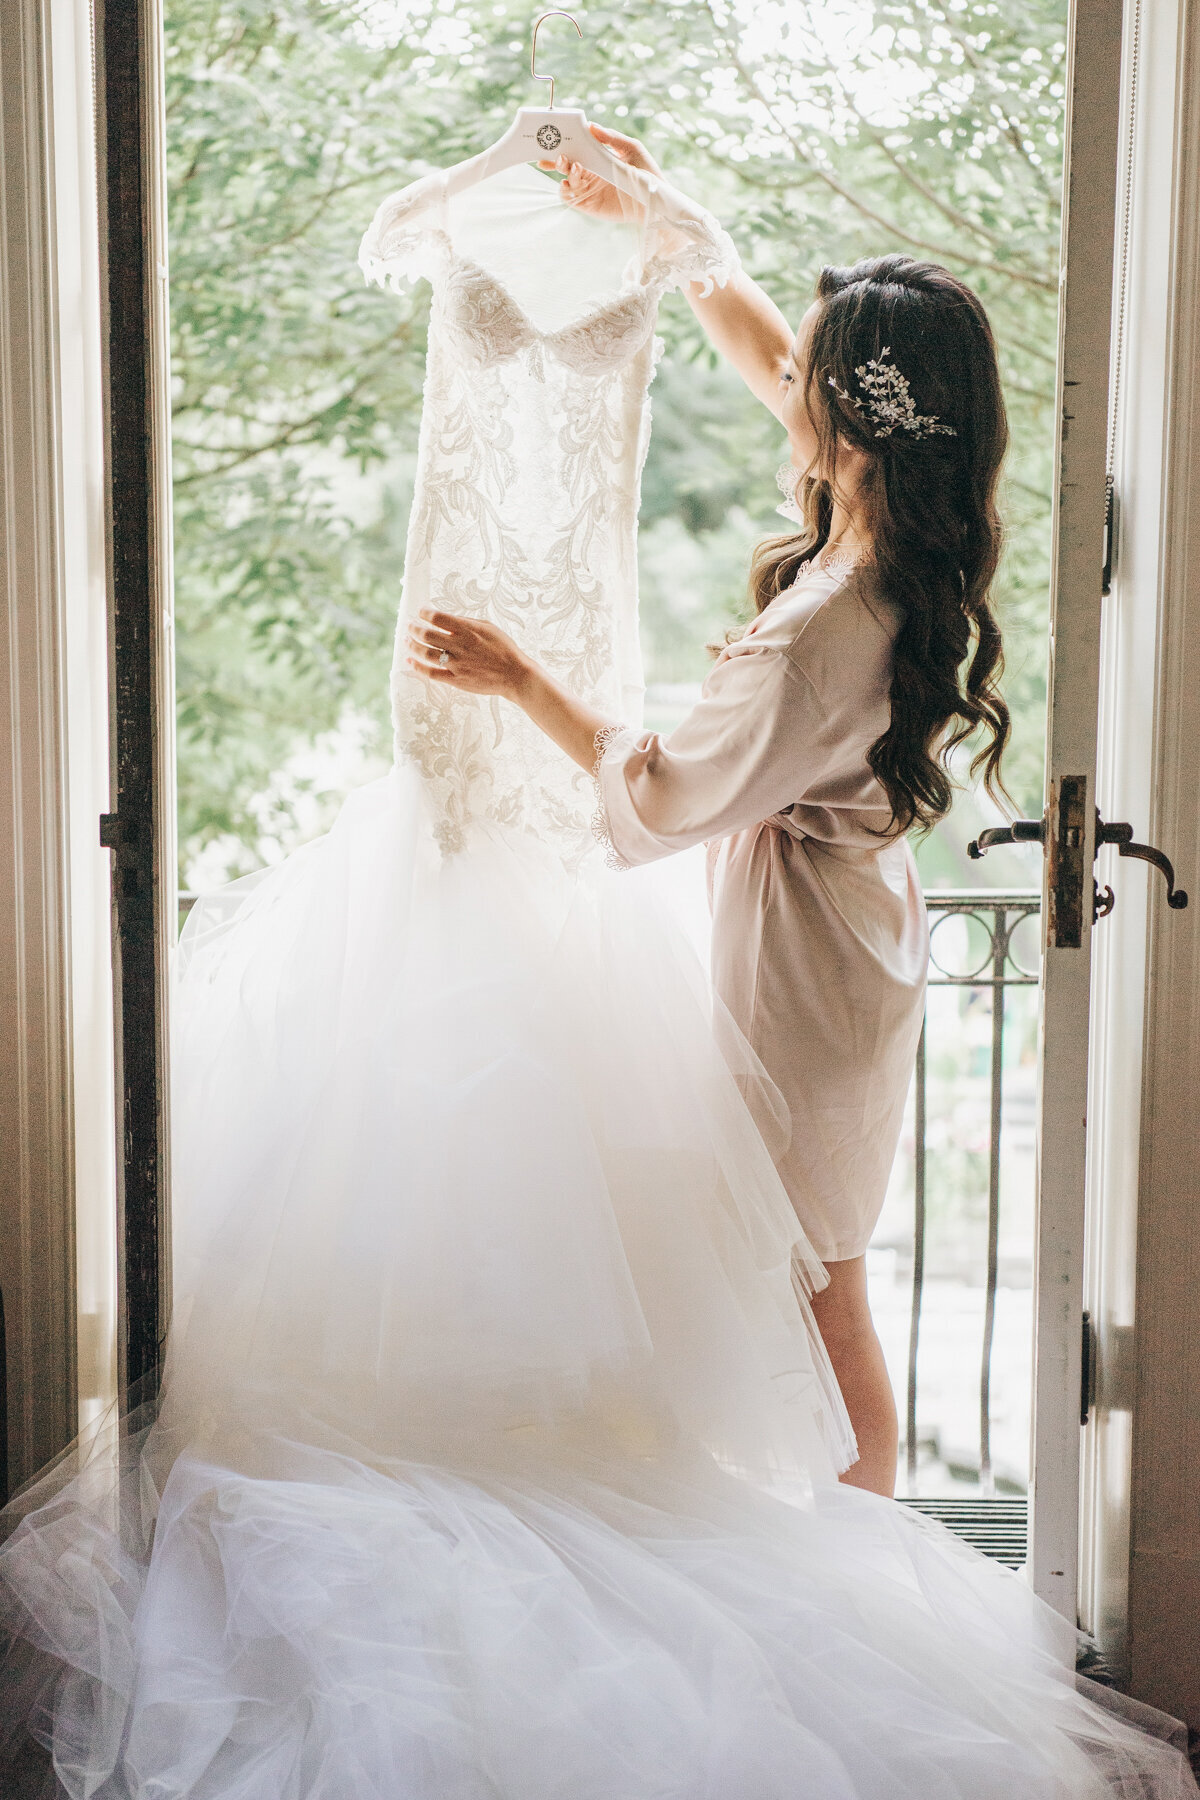 Bride holding up beautiful wedding dress